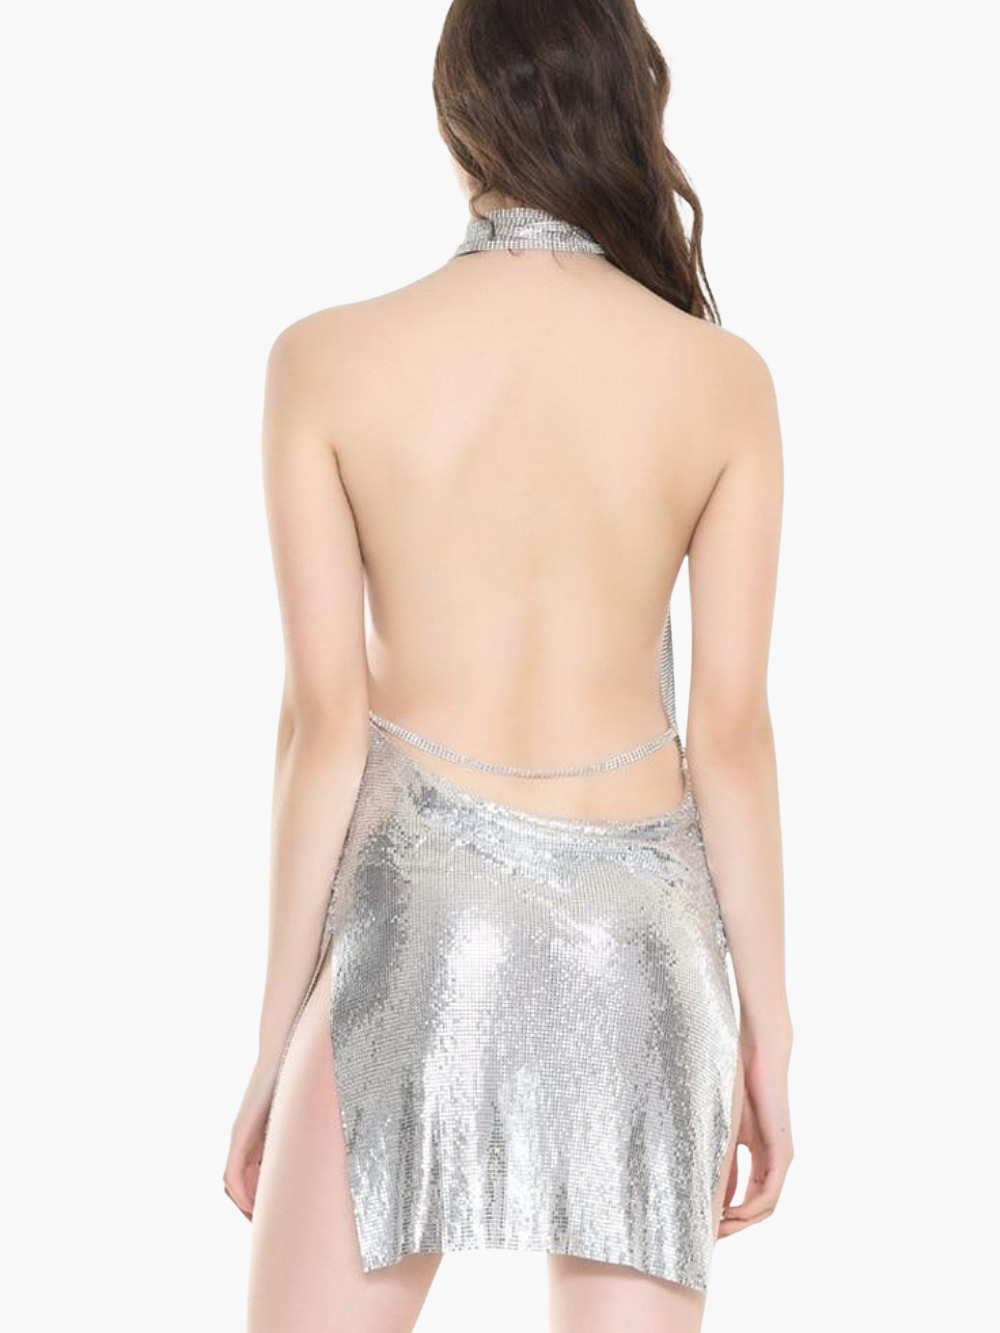 AZZAM Backless Silver Mirror Dress